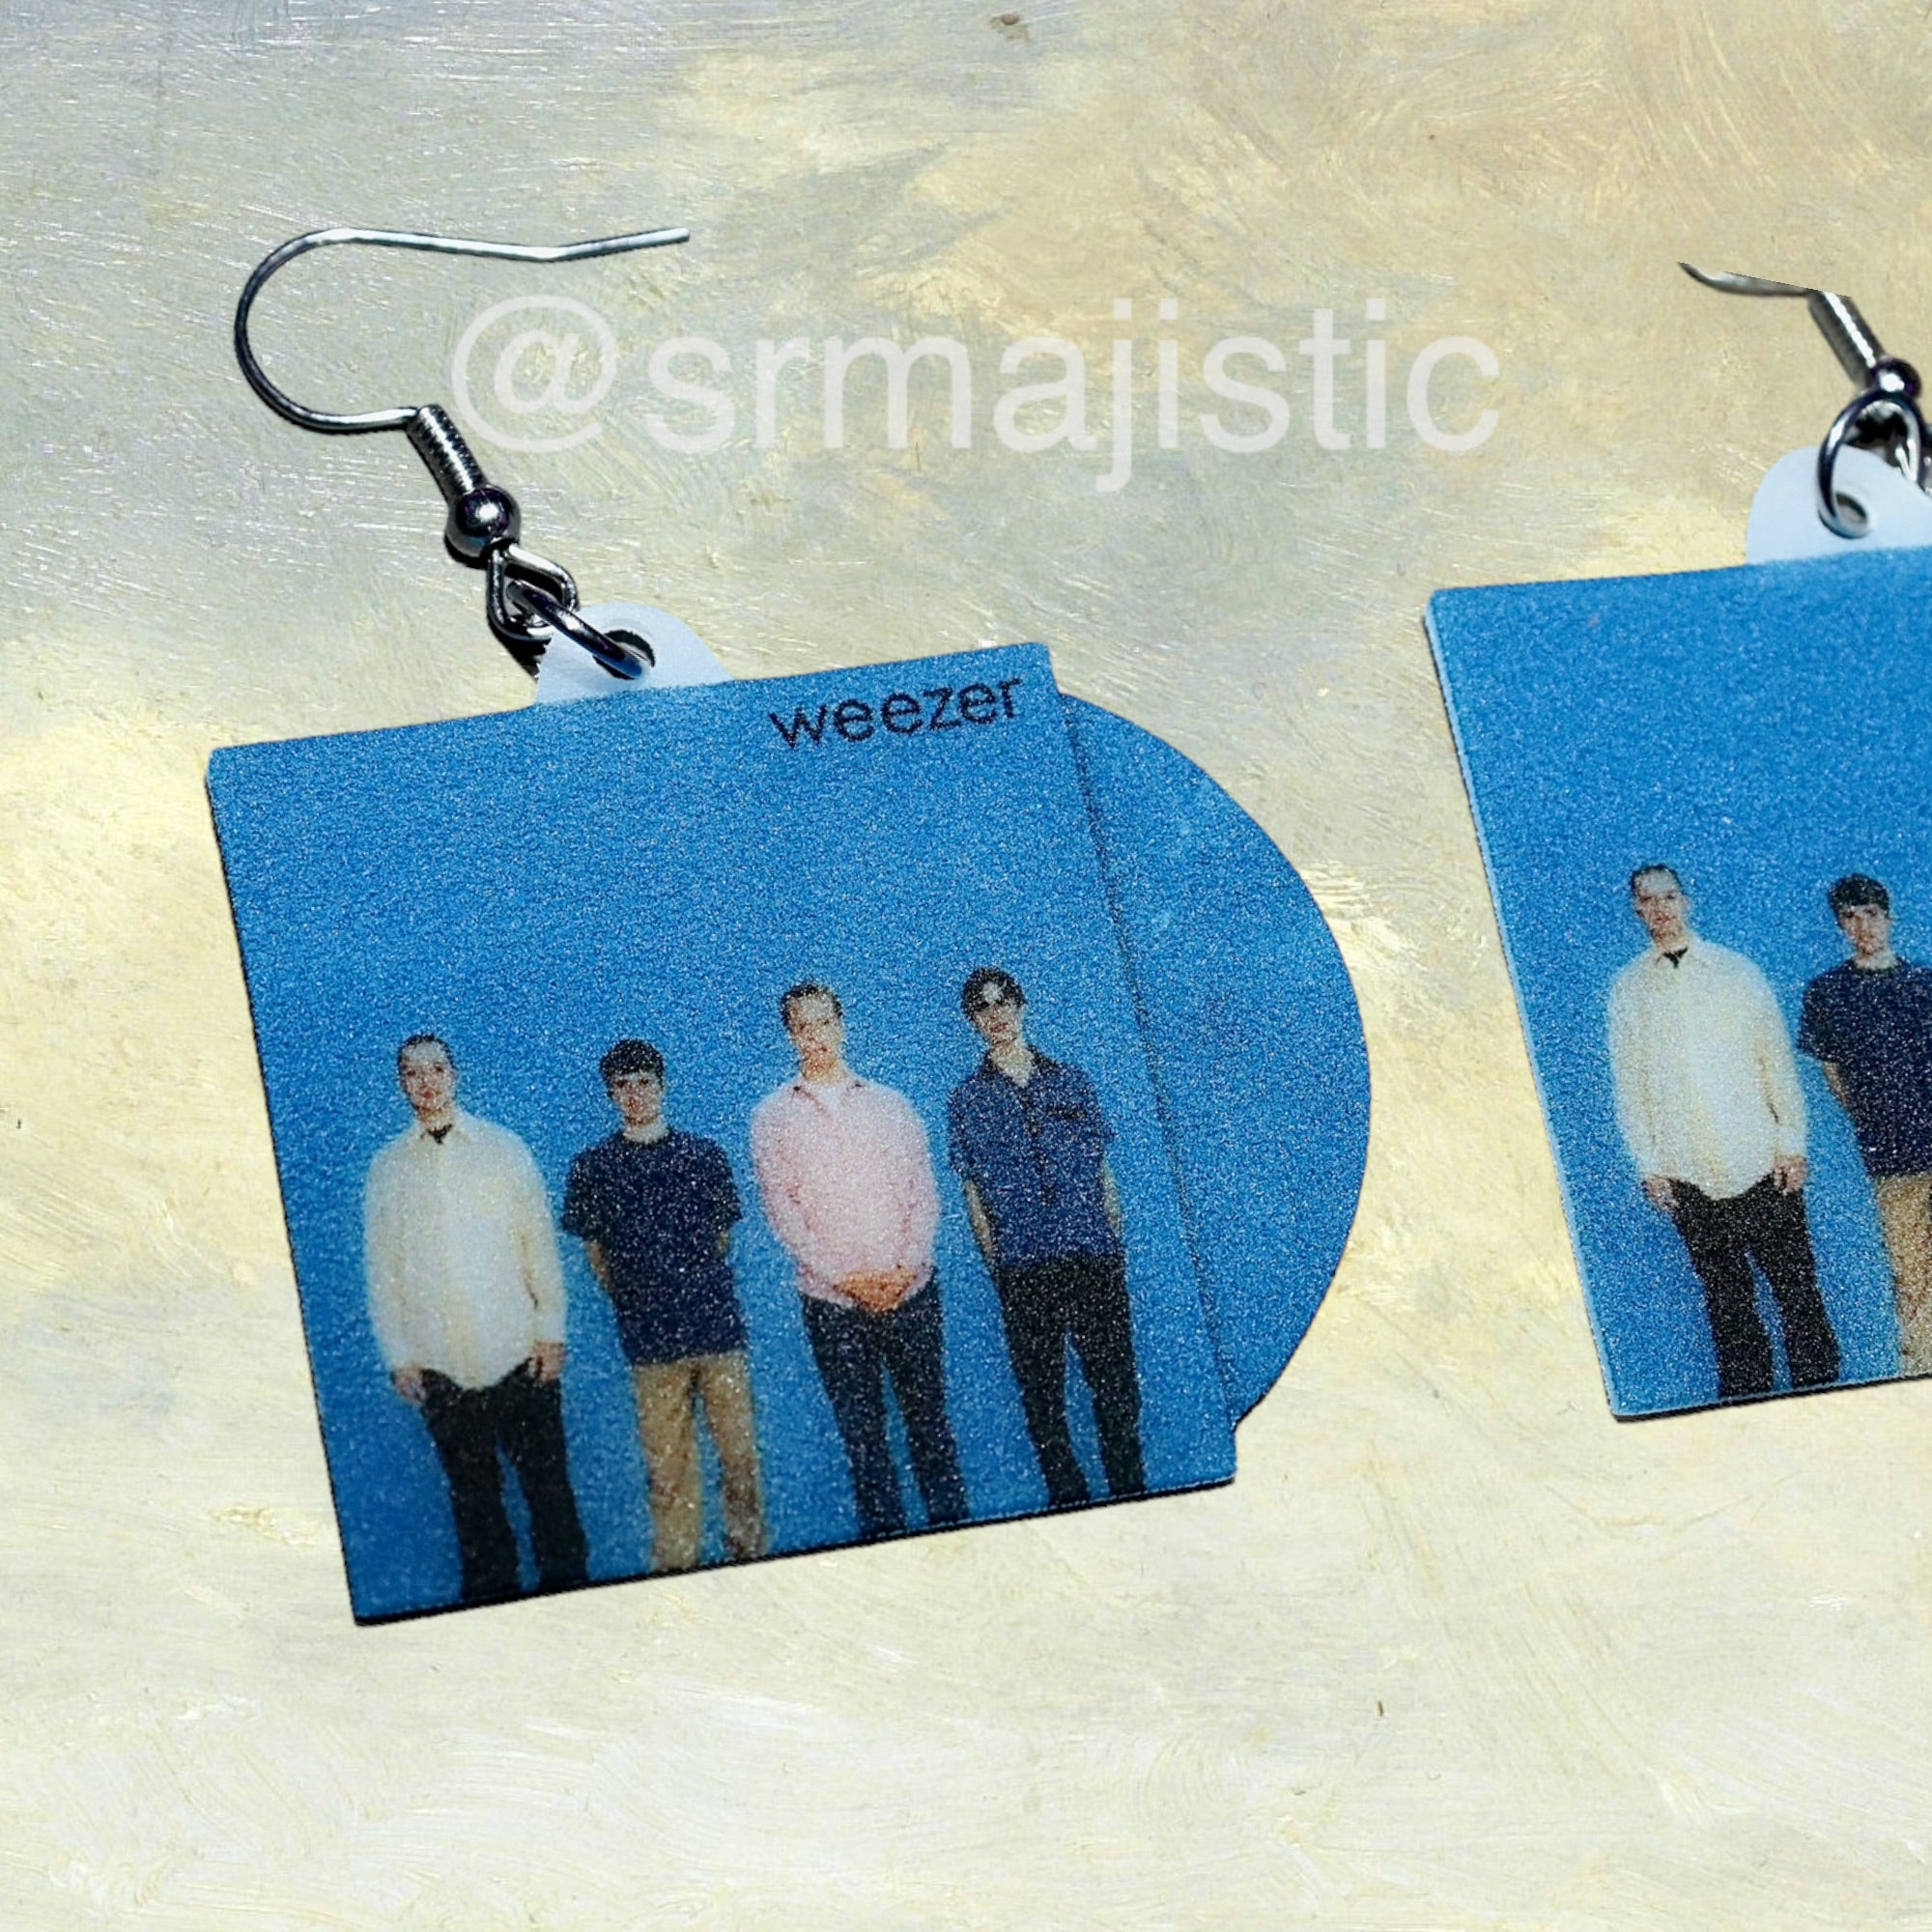 Weezer (Blue Album) Vinyl Album Handmade Earrings!